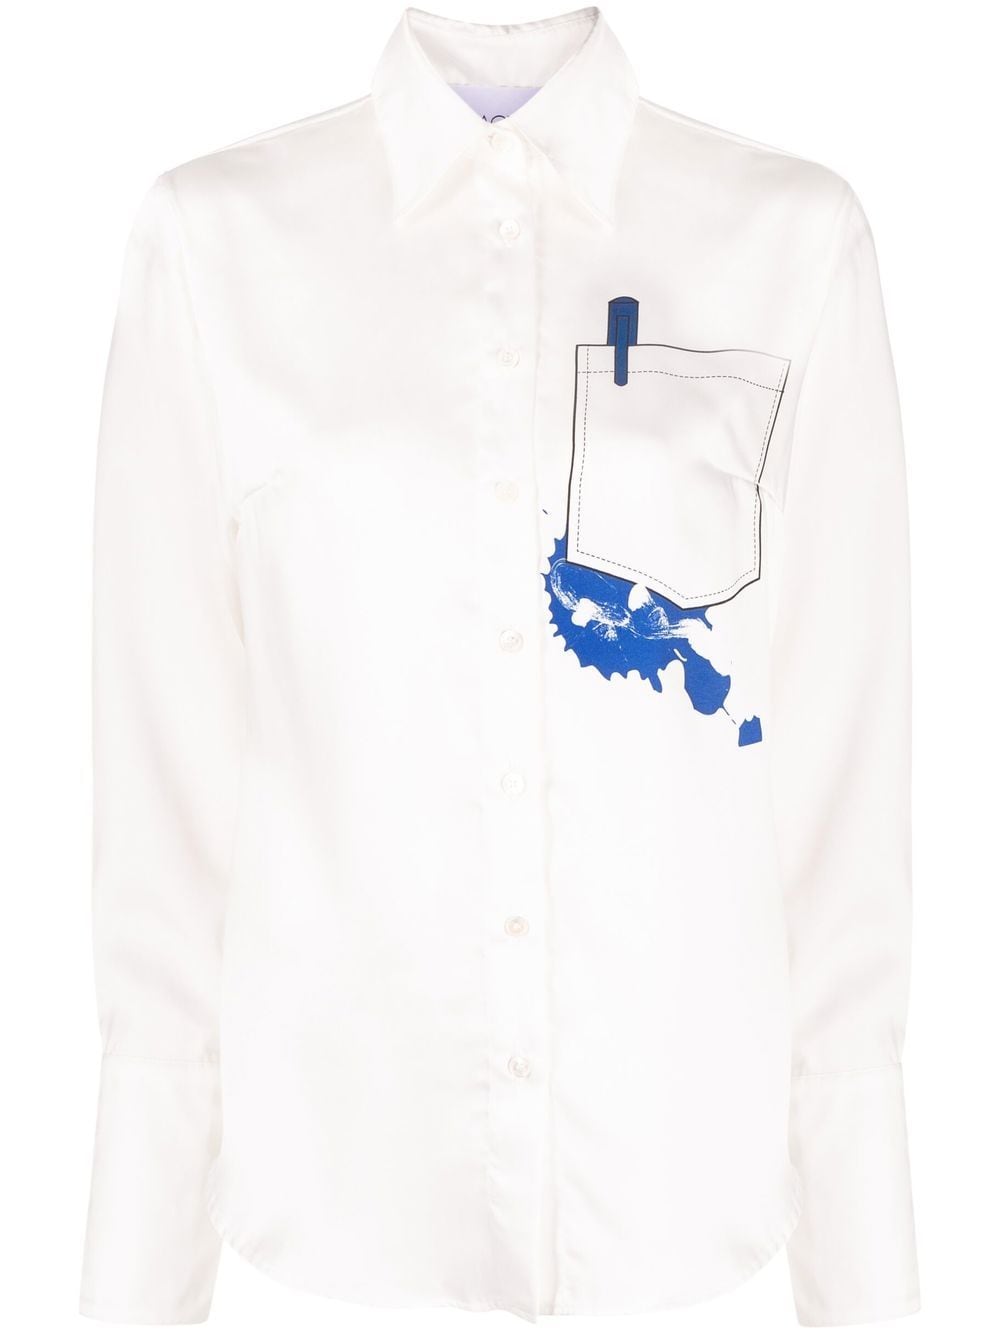 AZ FACTORY Tribute Ink Stain blouse - White von AZ FACTORY